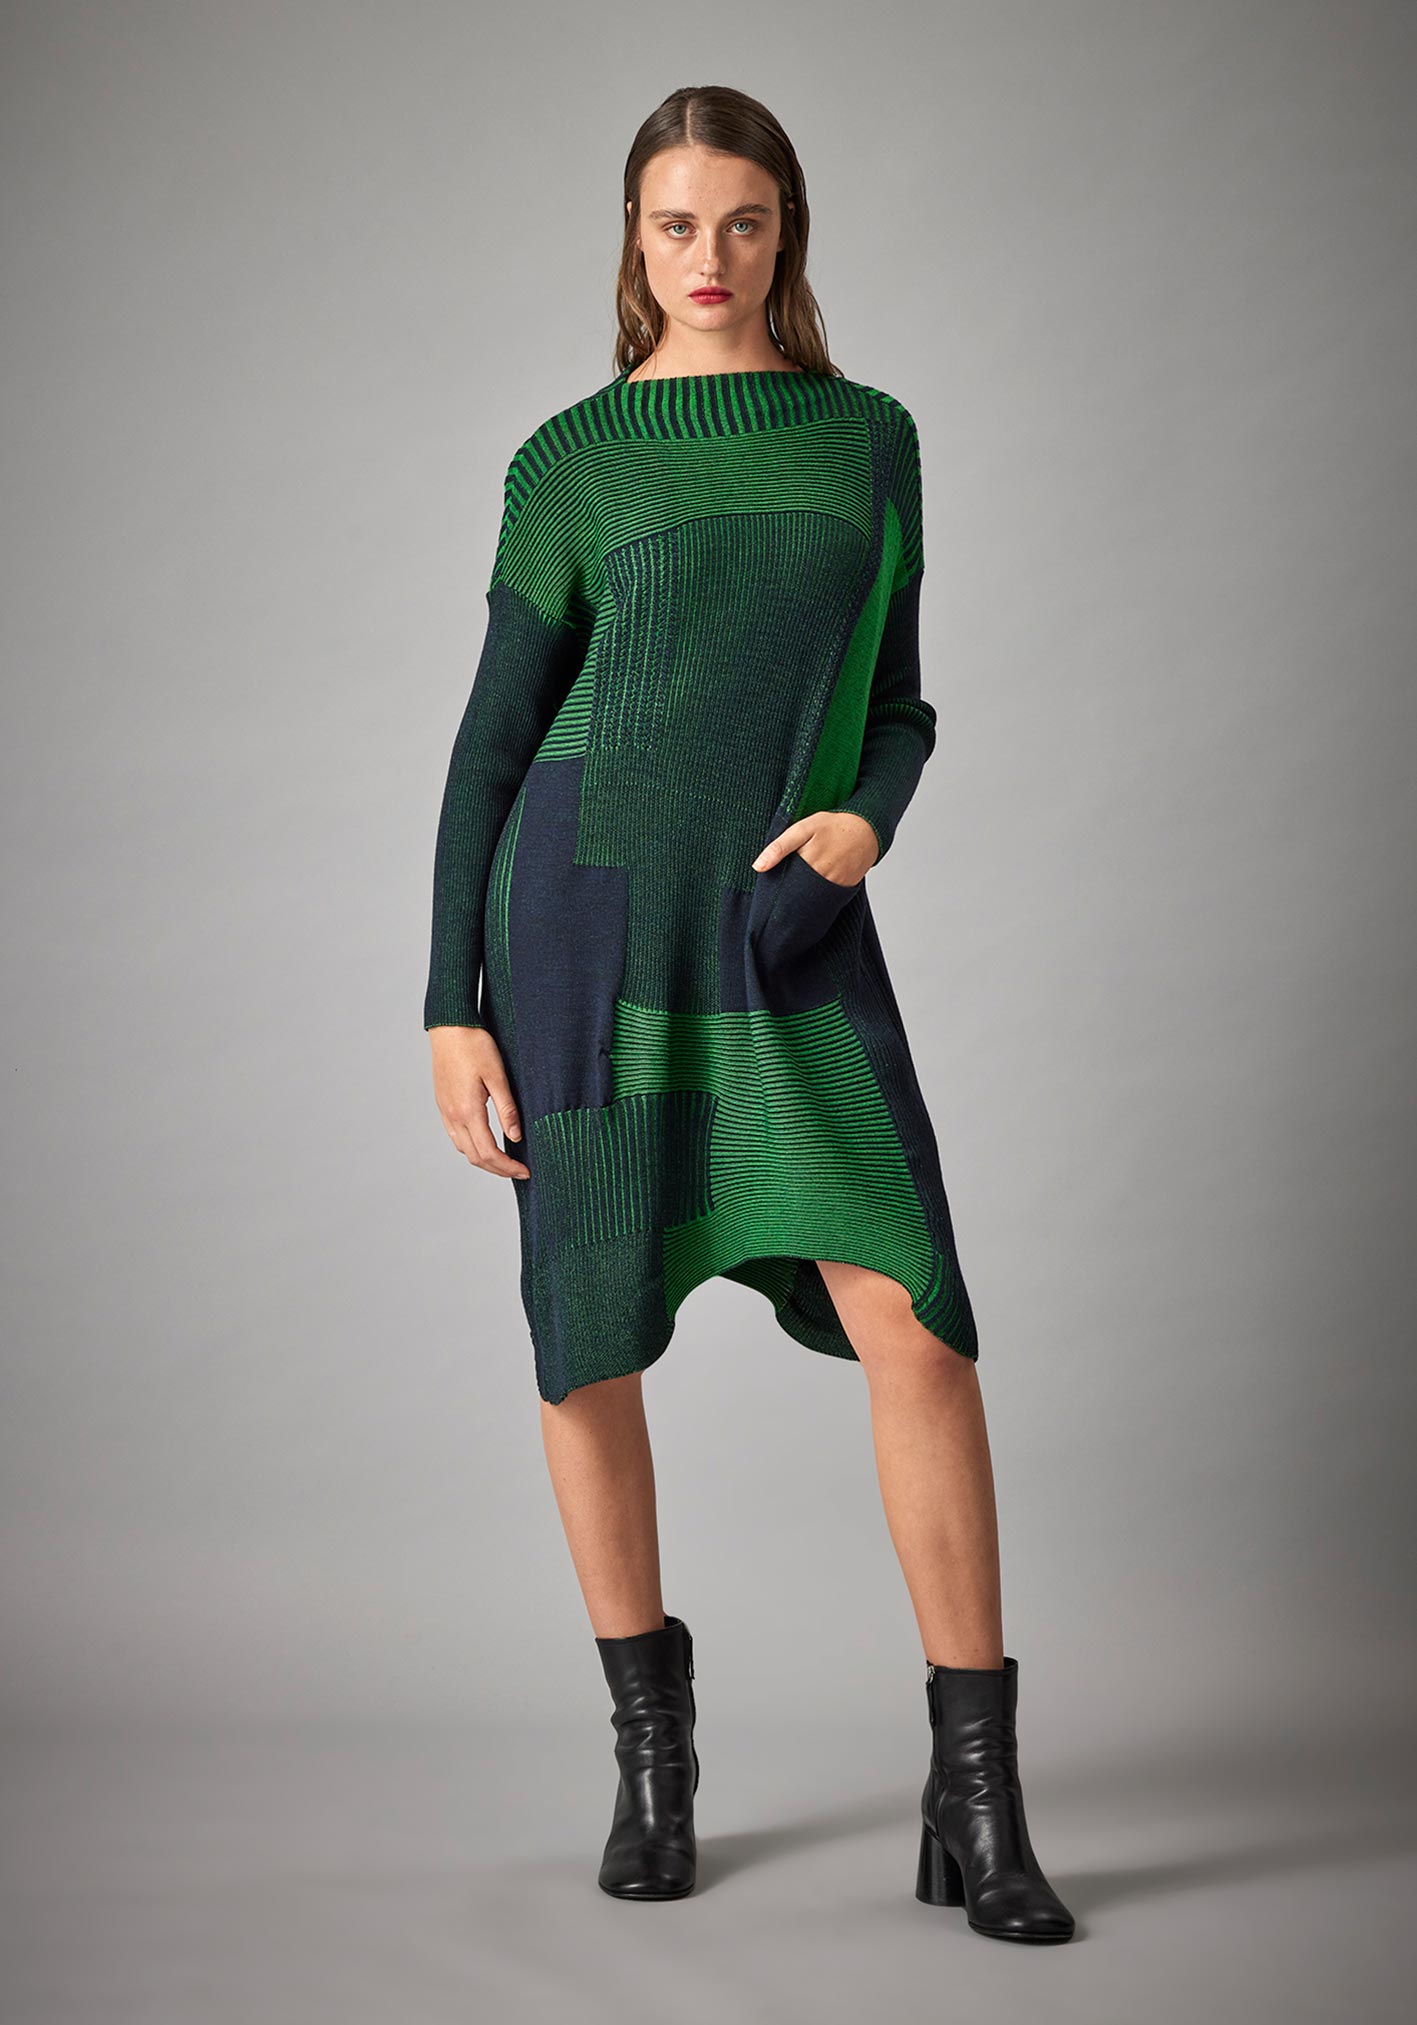 buy the latest Fretwork Tunic Dress online